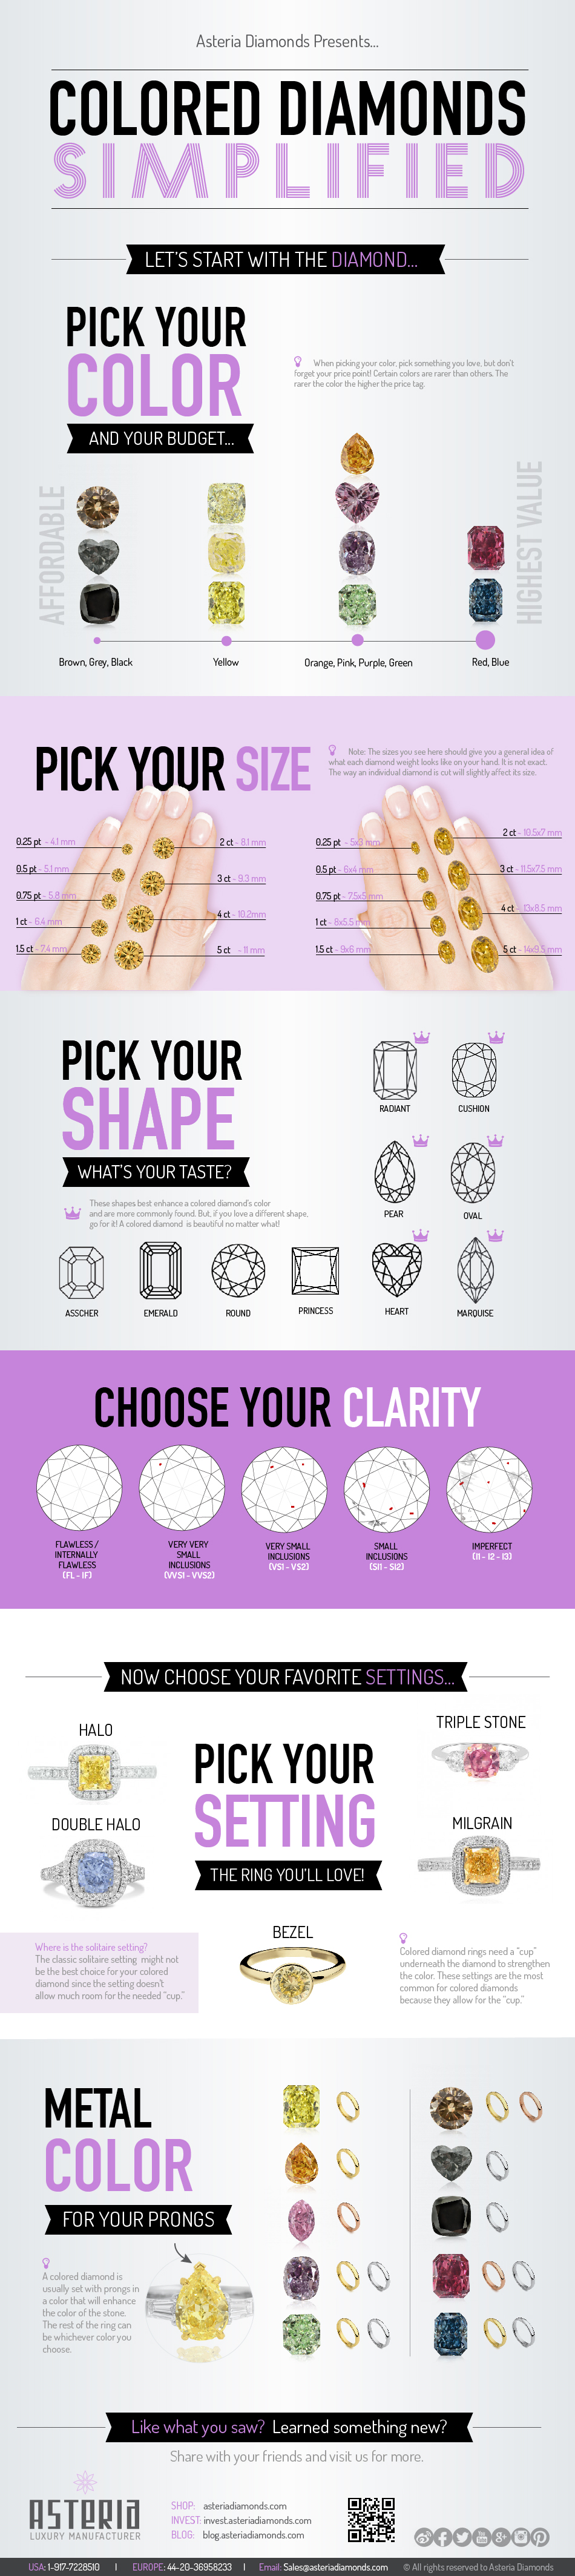 Colored Diamonds Simplified